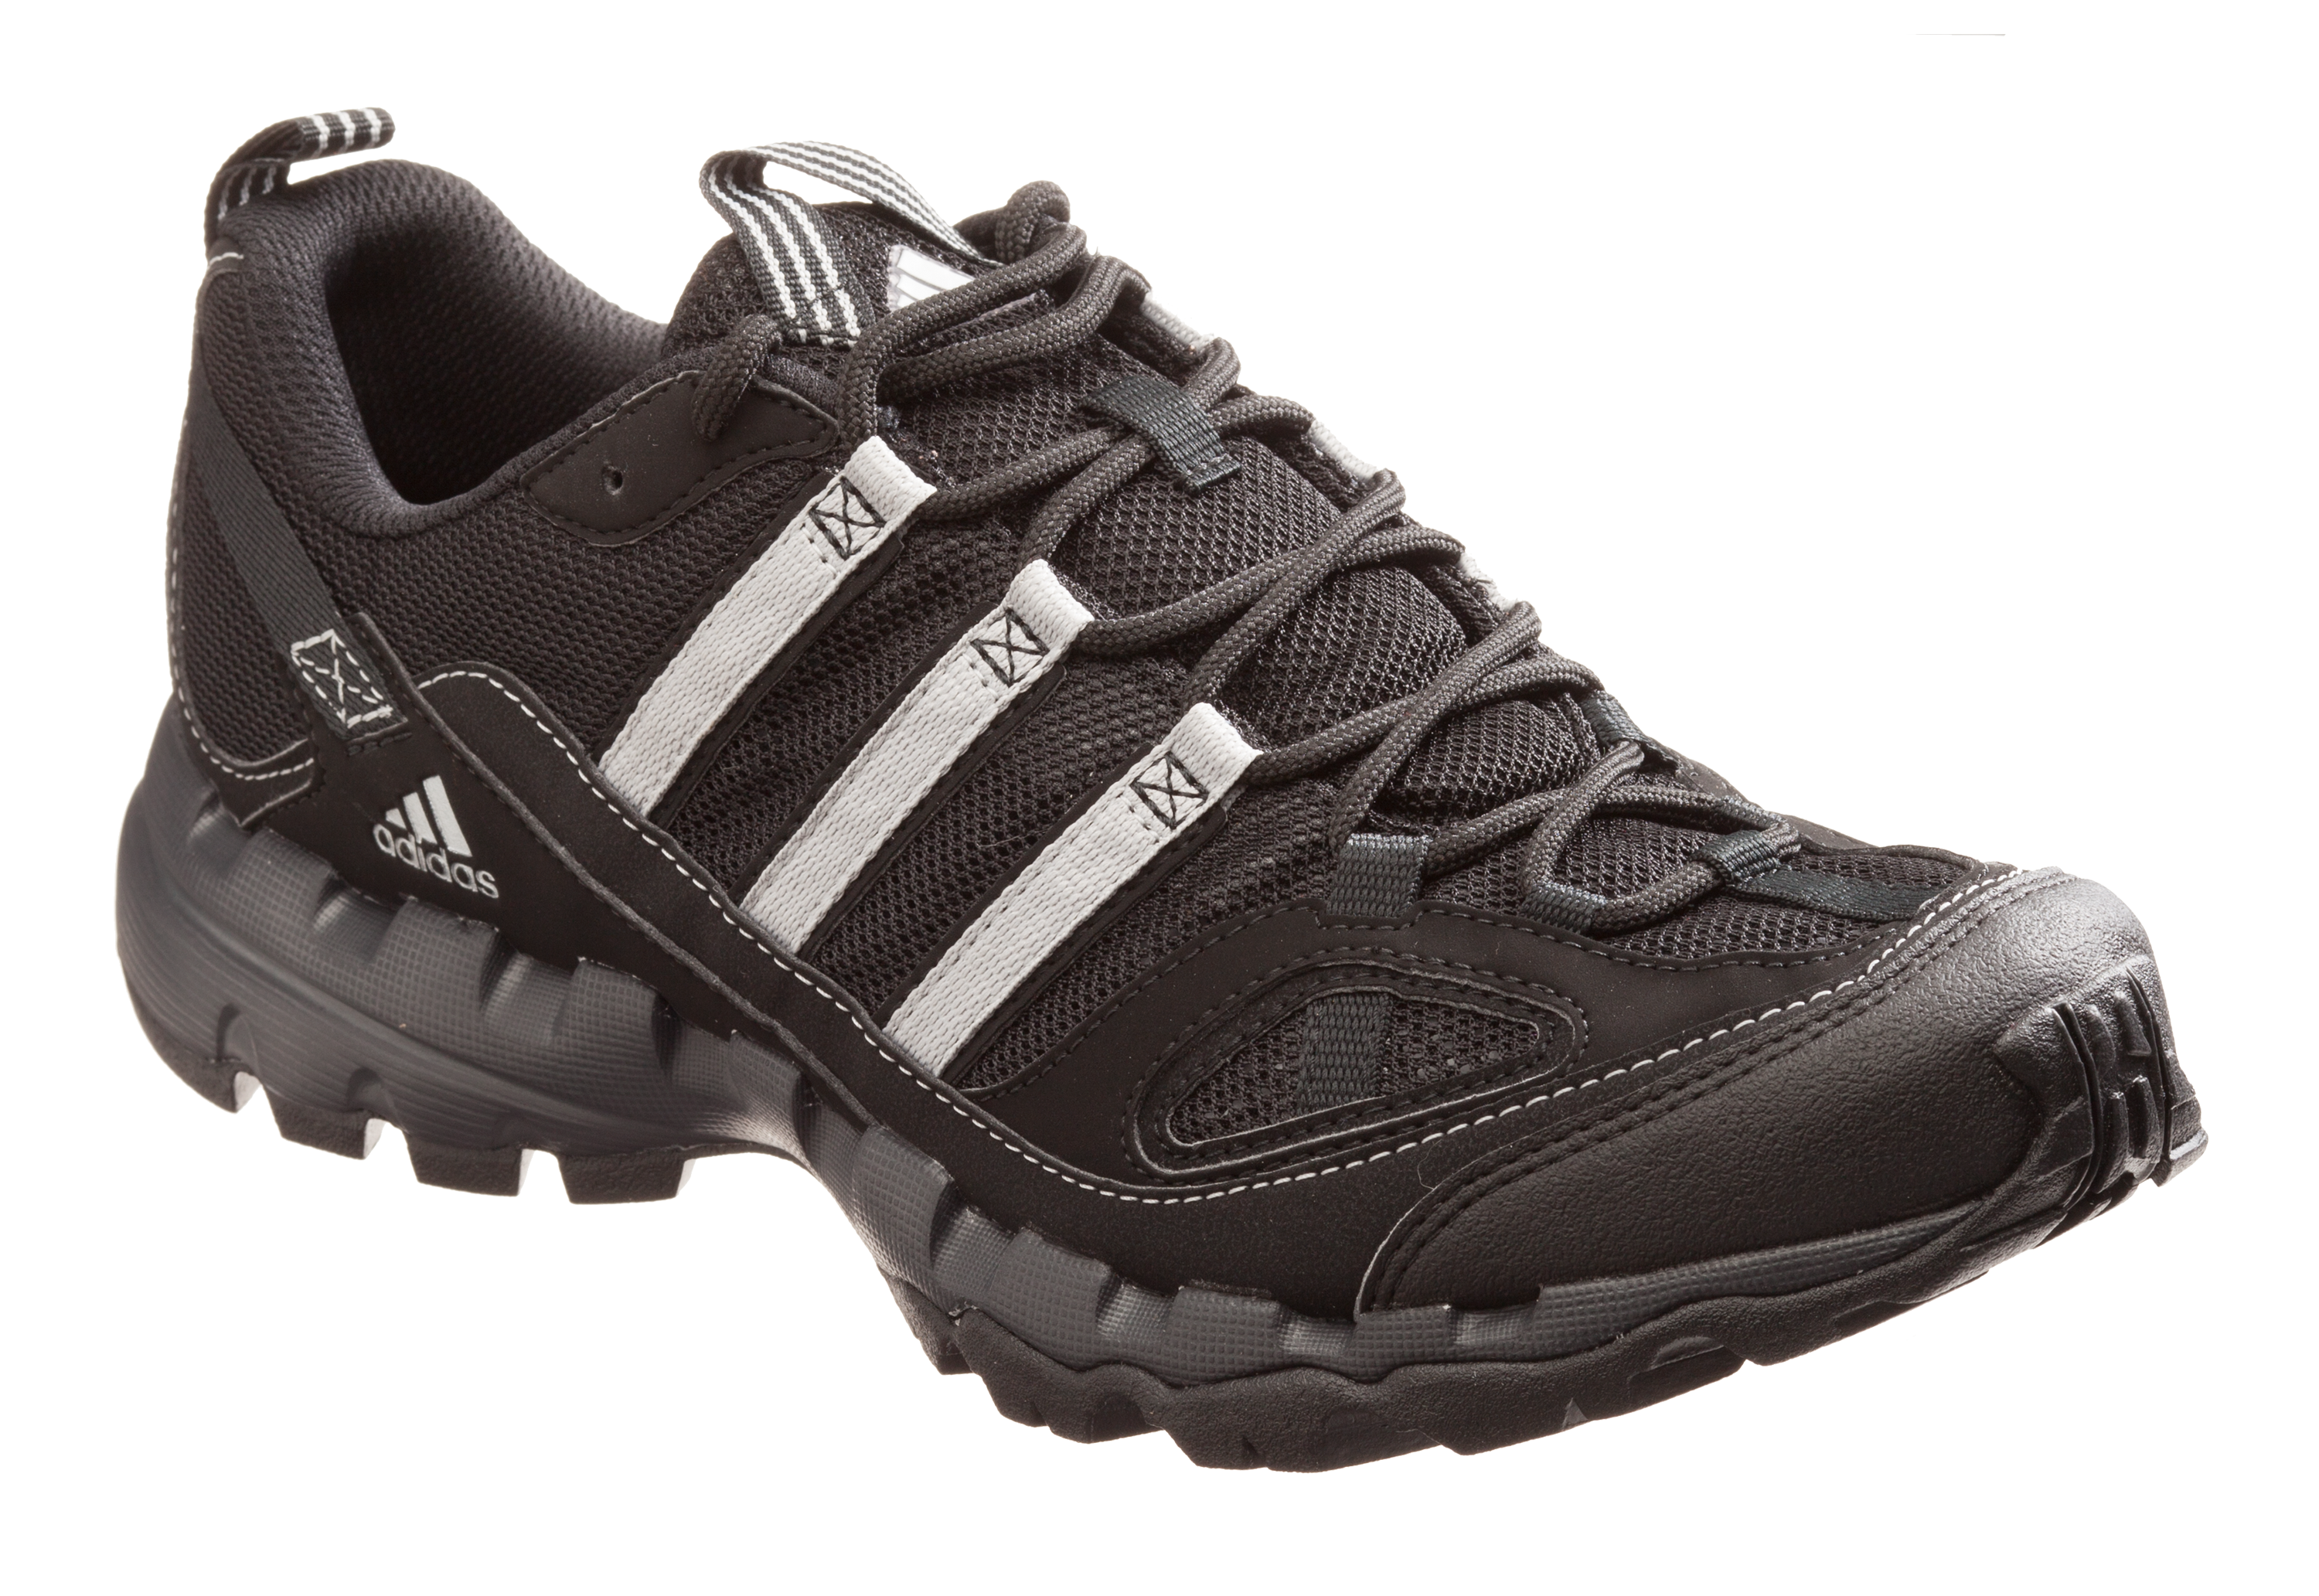 Adidas 1 Trail Shoes for Men | Bass Pro Shops